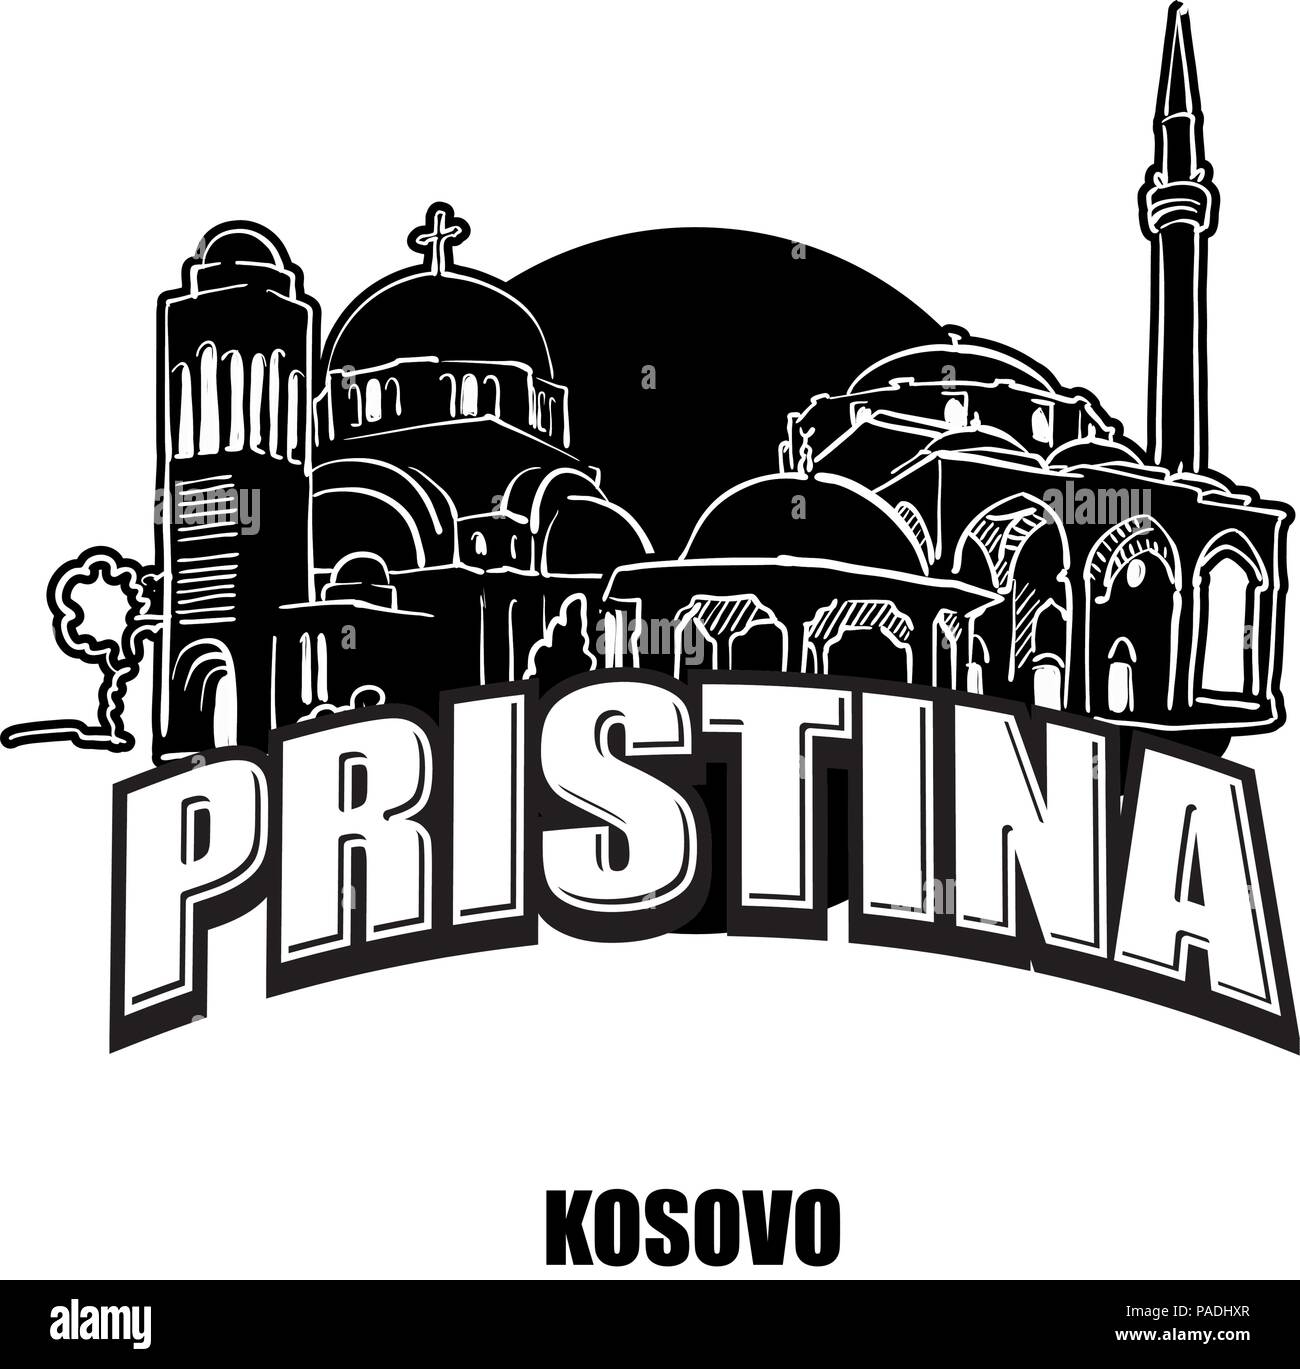 Prstina, Kosovo, black and white logo for high quality prints. Hand drawn vector sketch. Stock Vector